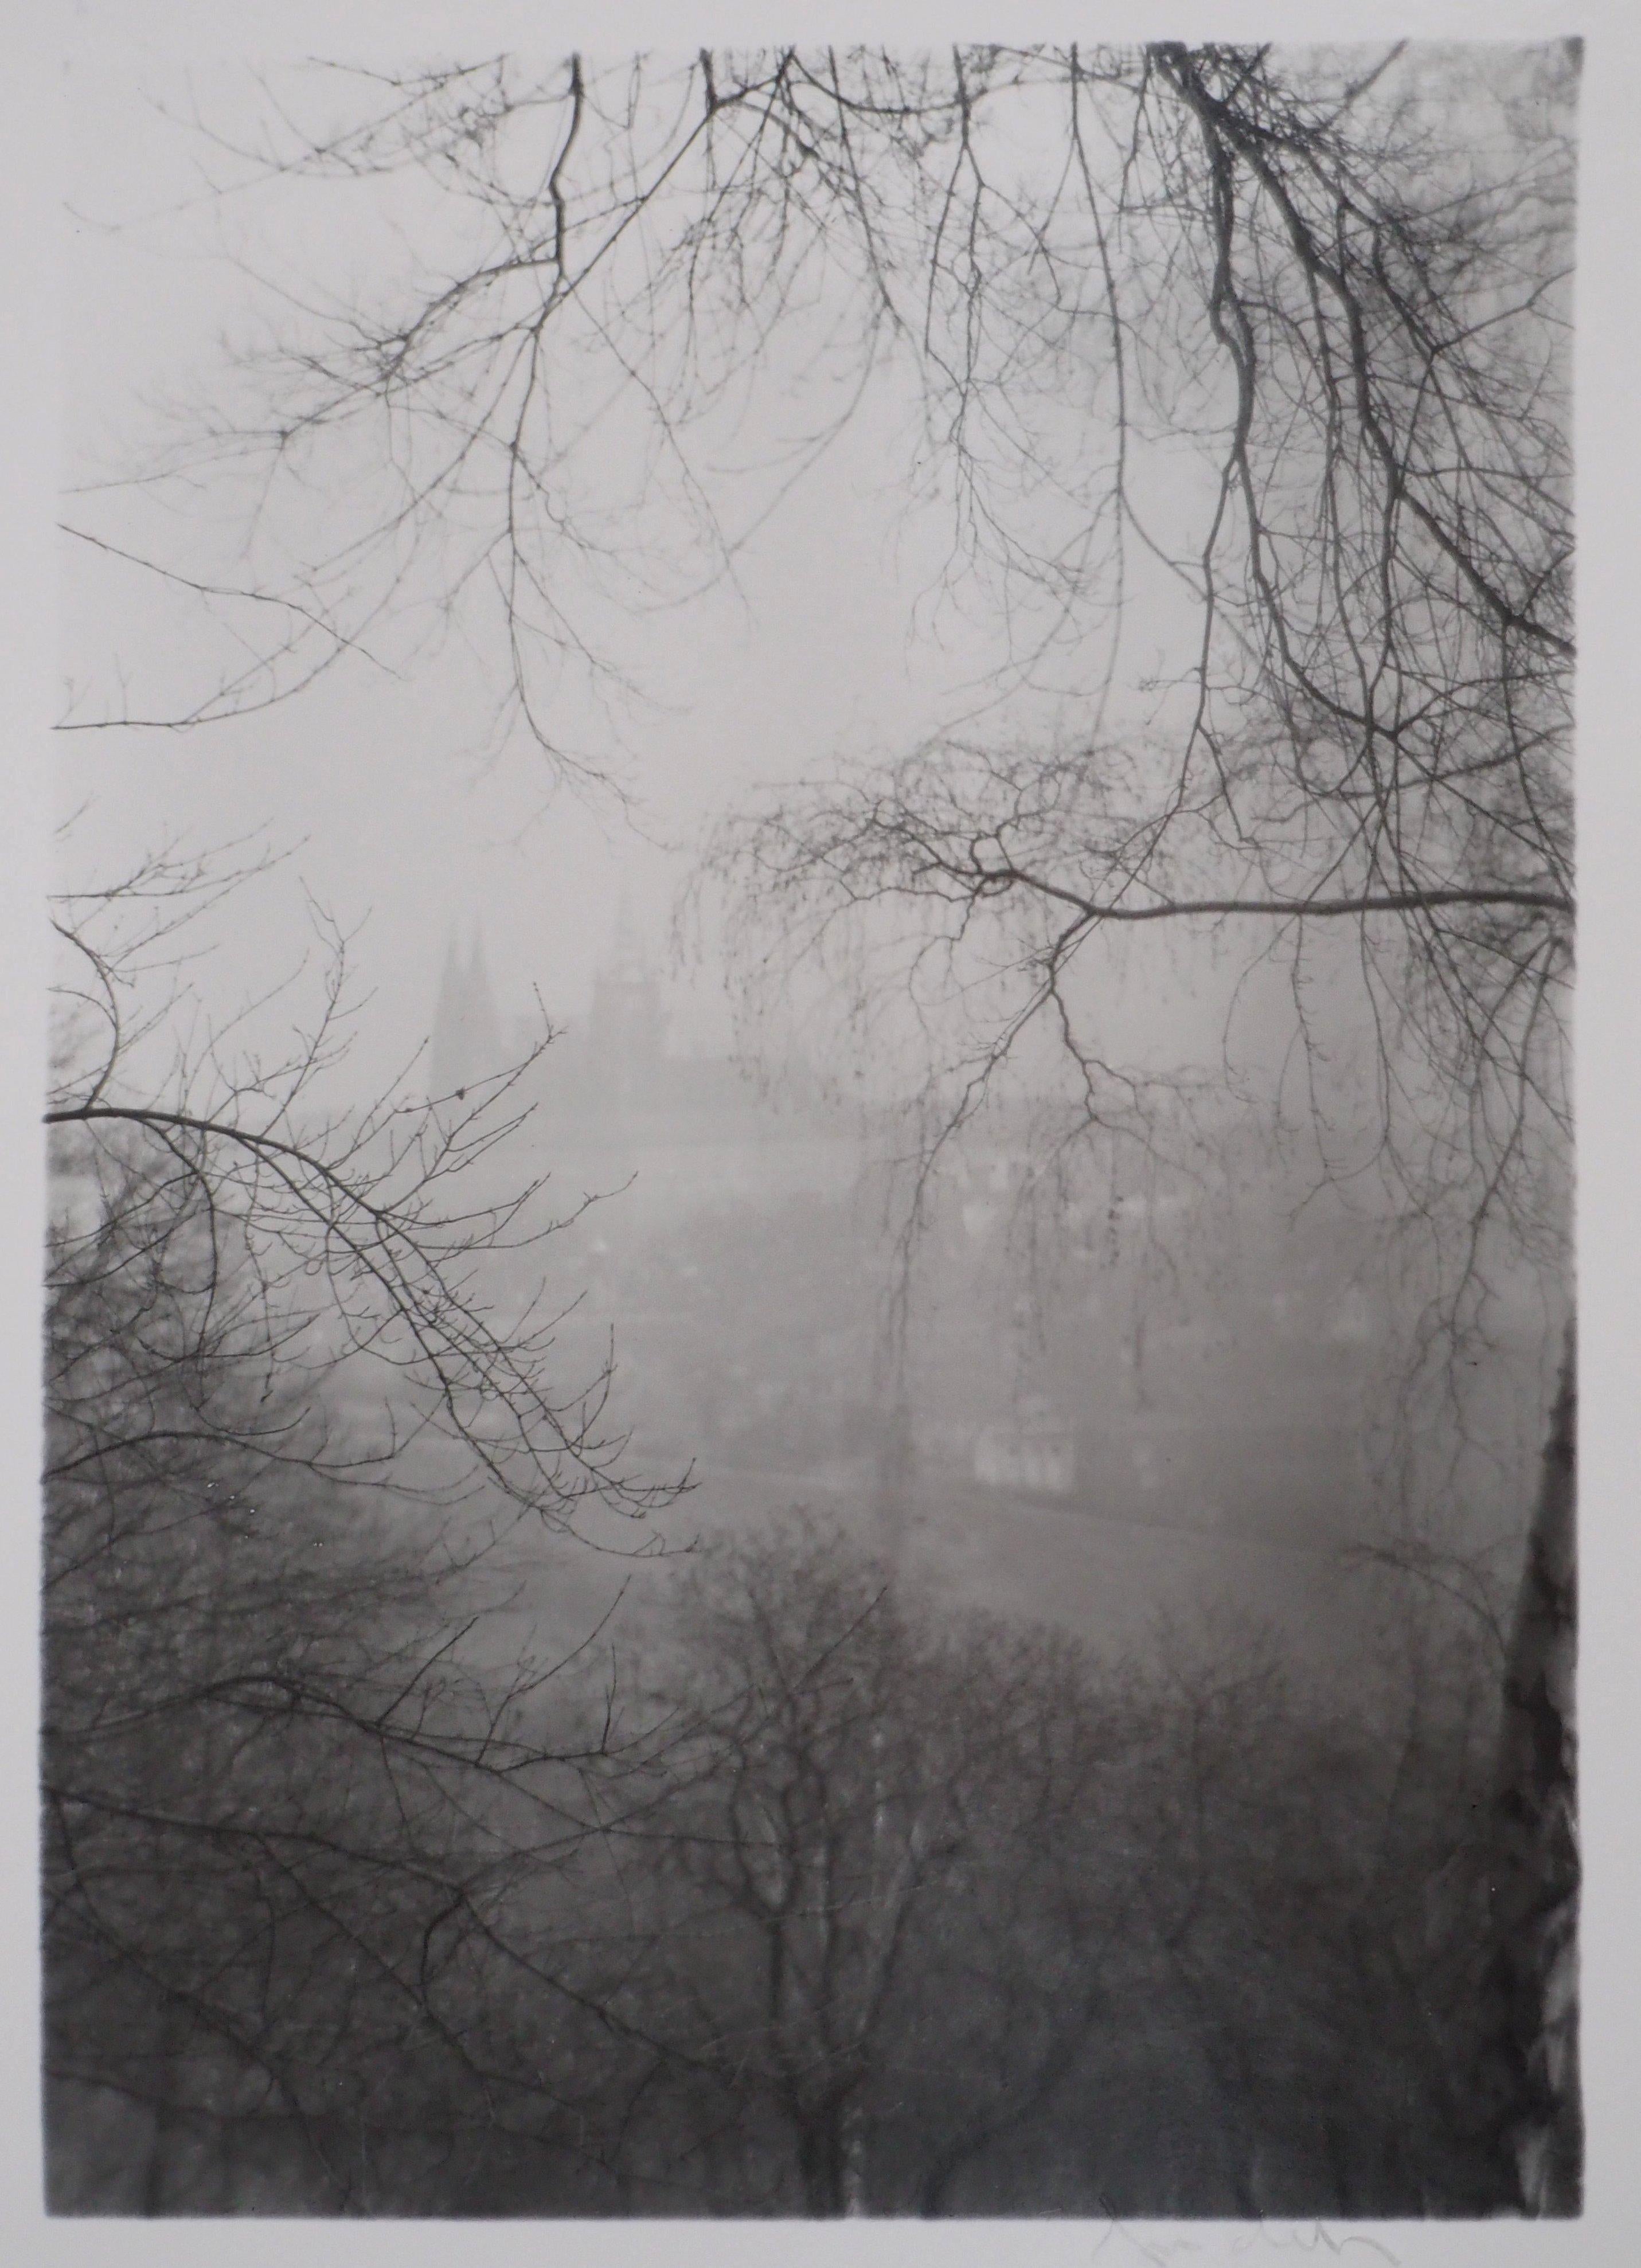 Josef Sudek Black and White Photograph - Prague Castle in the Fog - Original Hand Signed Gelatin Silver Photograph, 1972